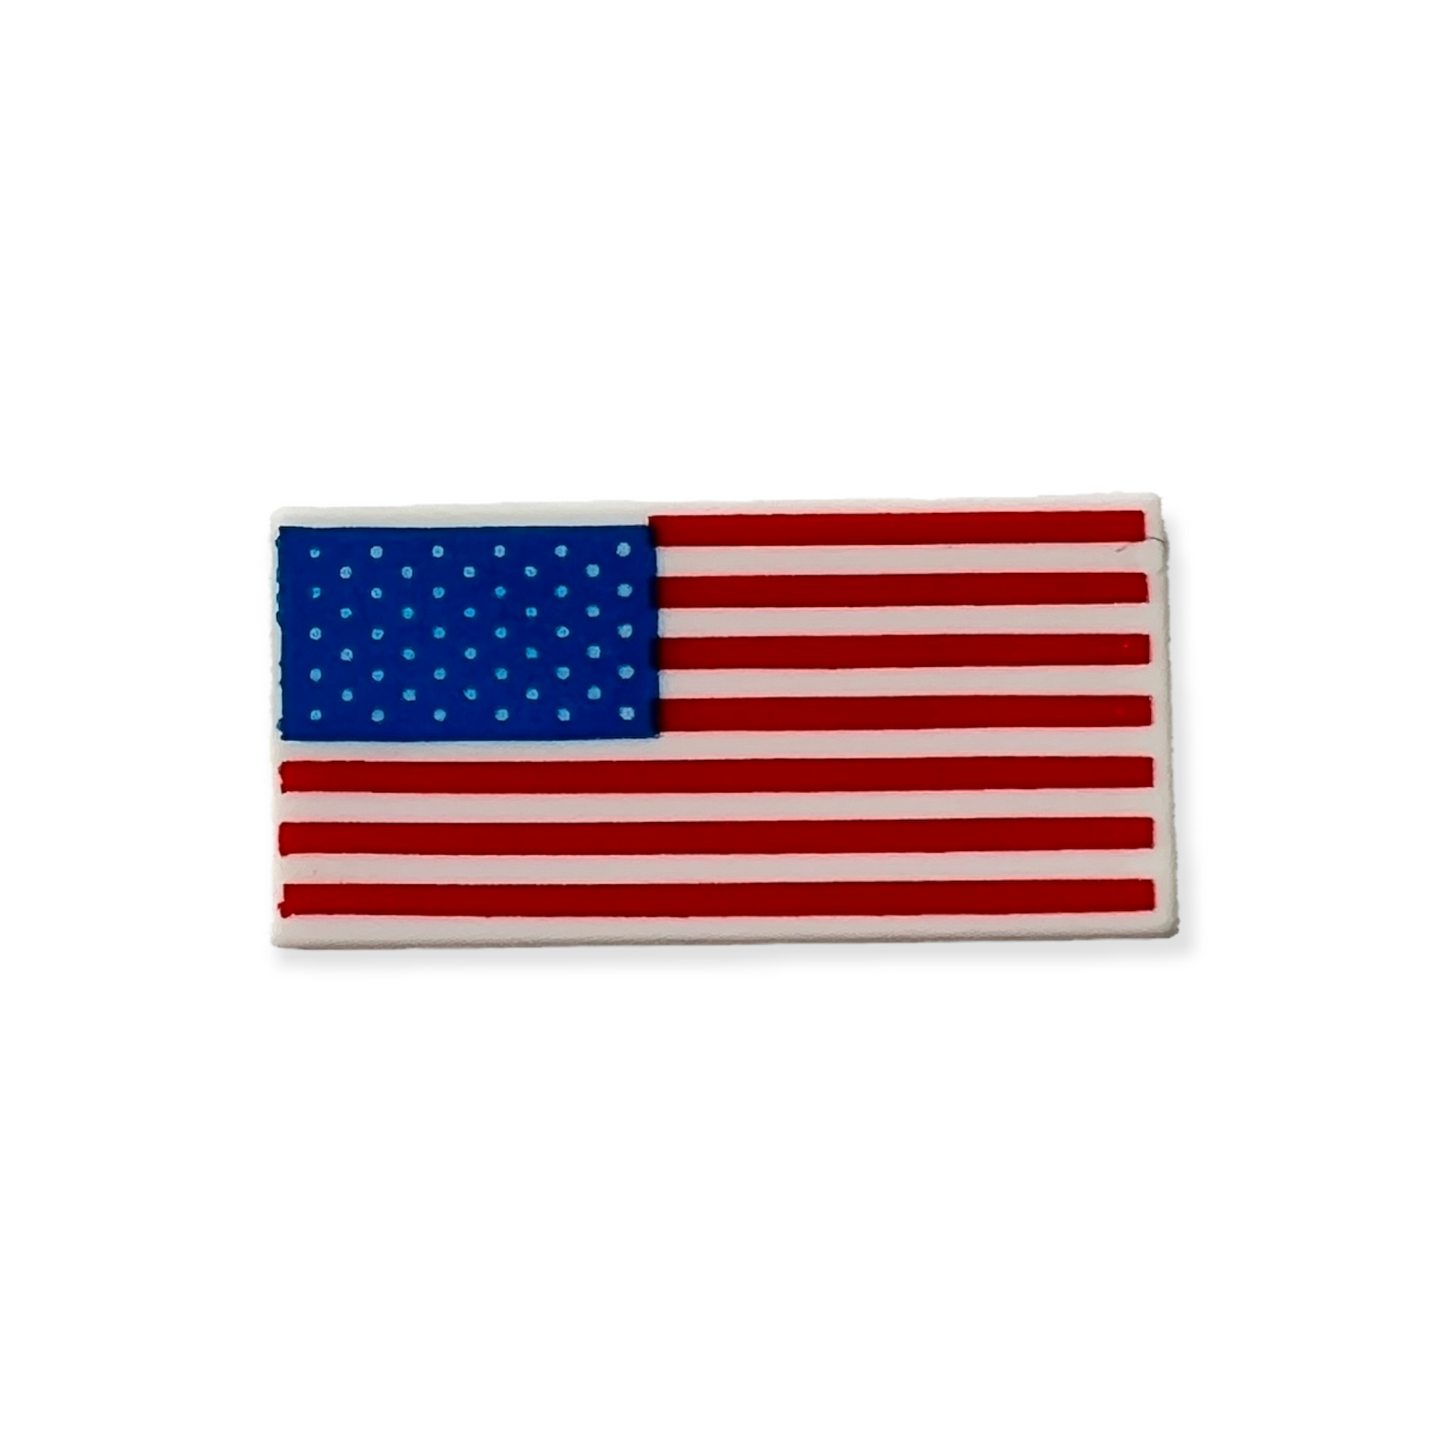 LEGO 1x2 Tile - USA Flagge